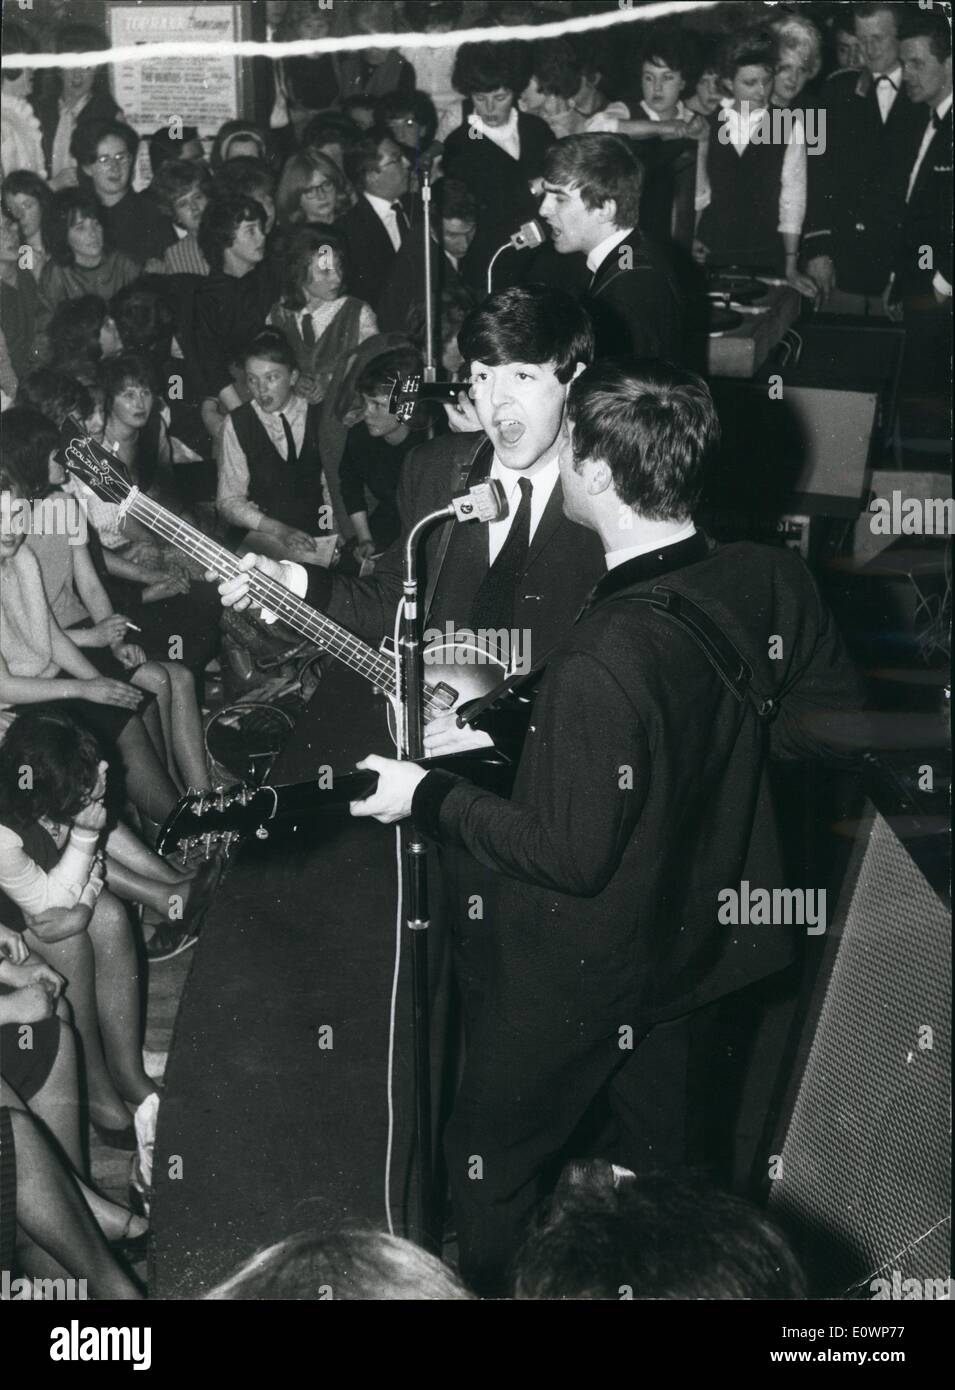 Nov. 11, 1963 - The Beatles pack 'em in at a Birkenhead cinema. Stock Photo